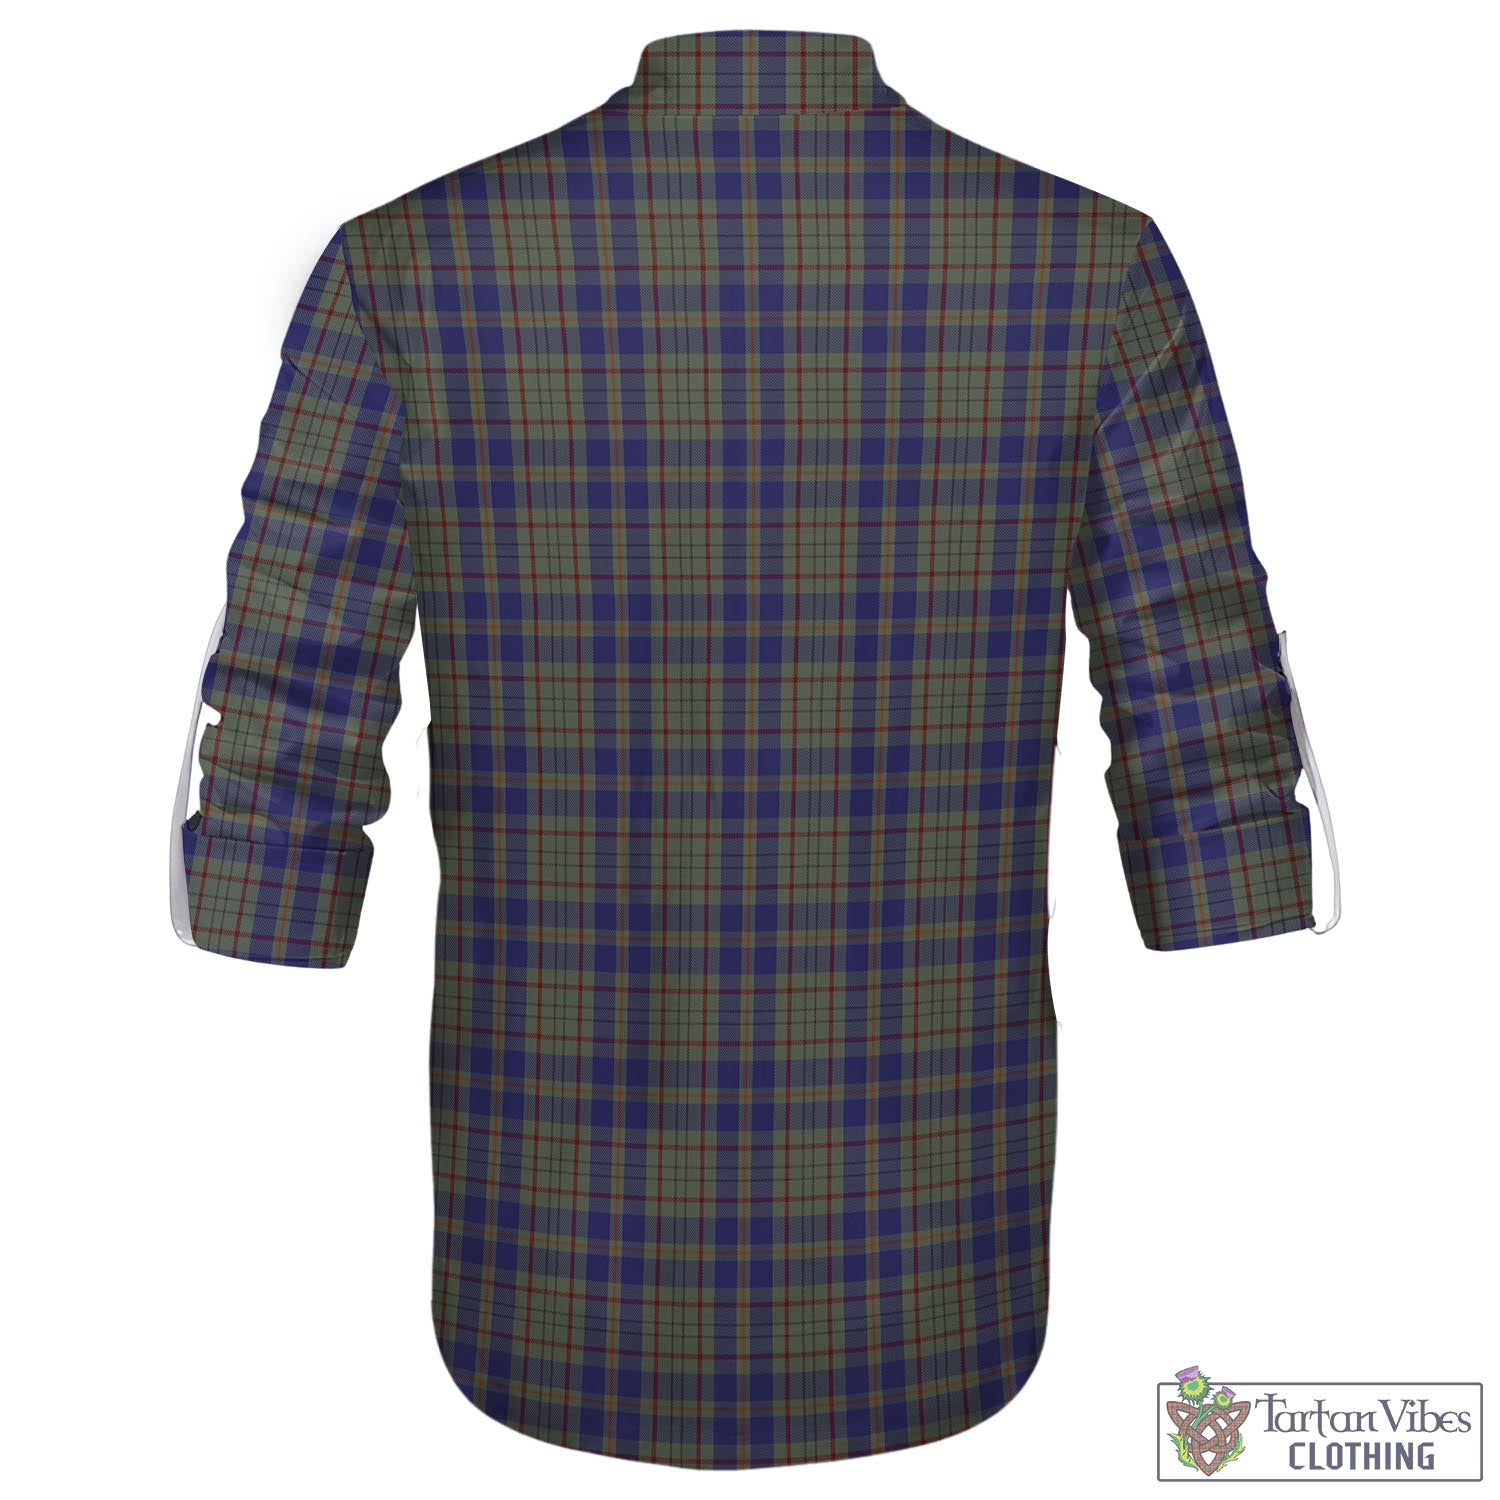 Tartan Vibes Clothing Kildare County Ireland Tartan Men's Scottish Traditional Jacobite Ghillie Kilt Shirt